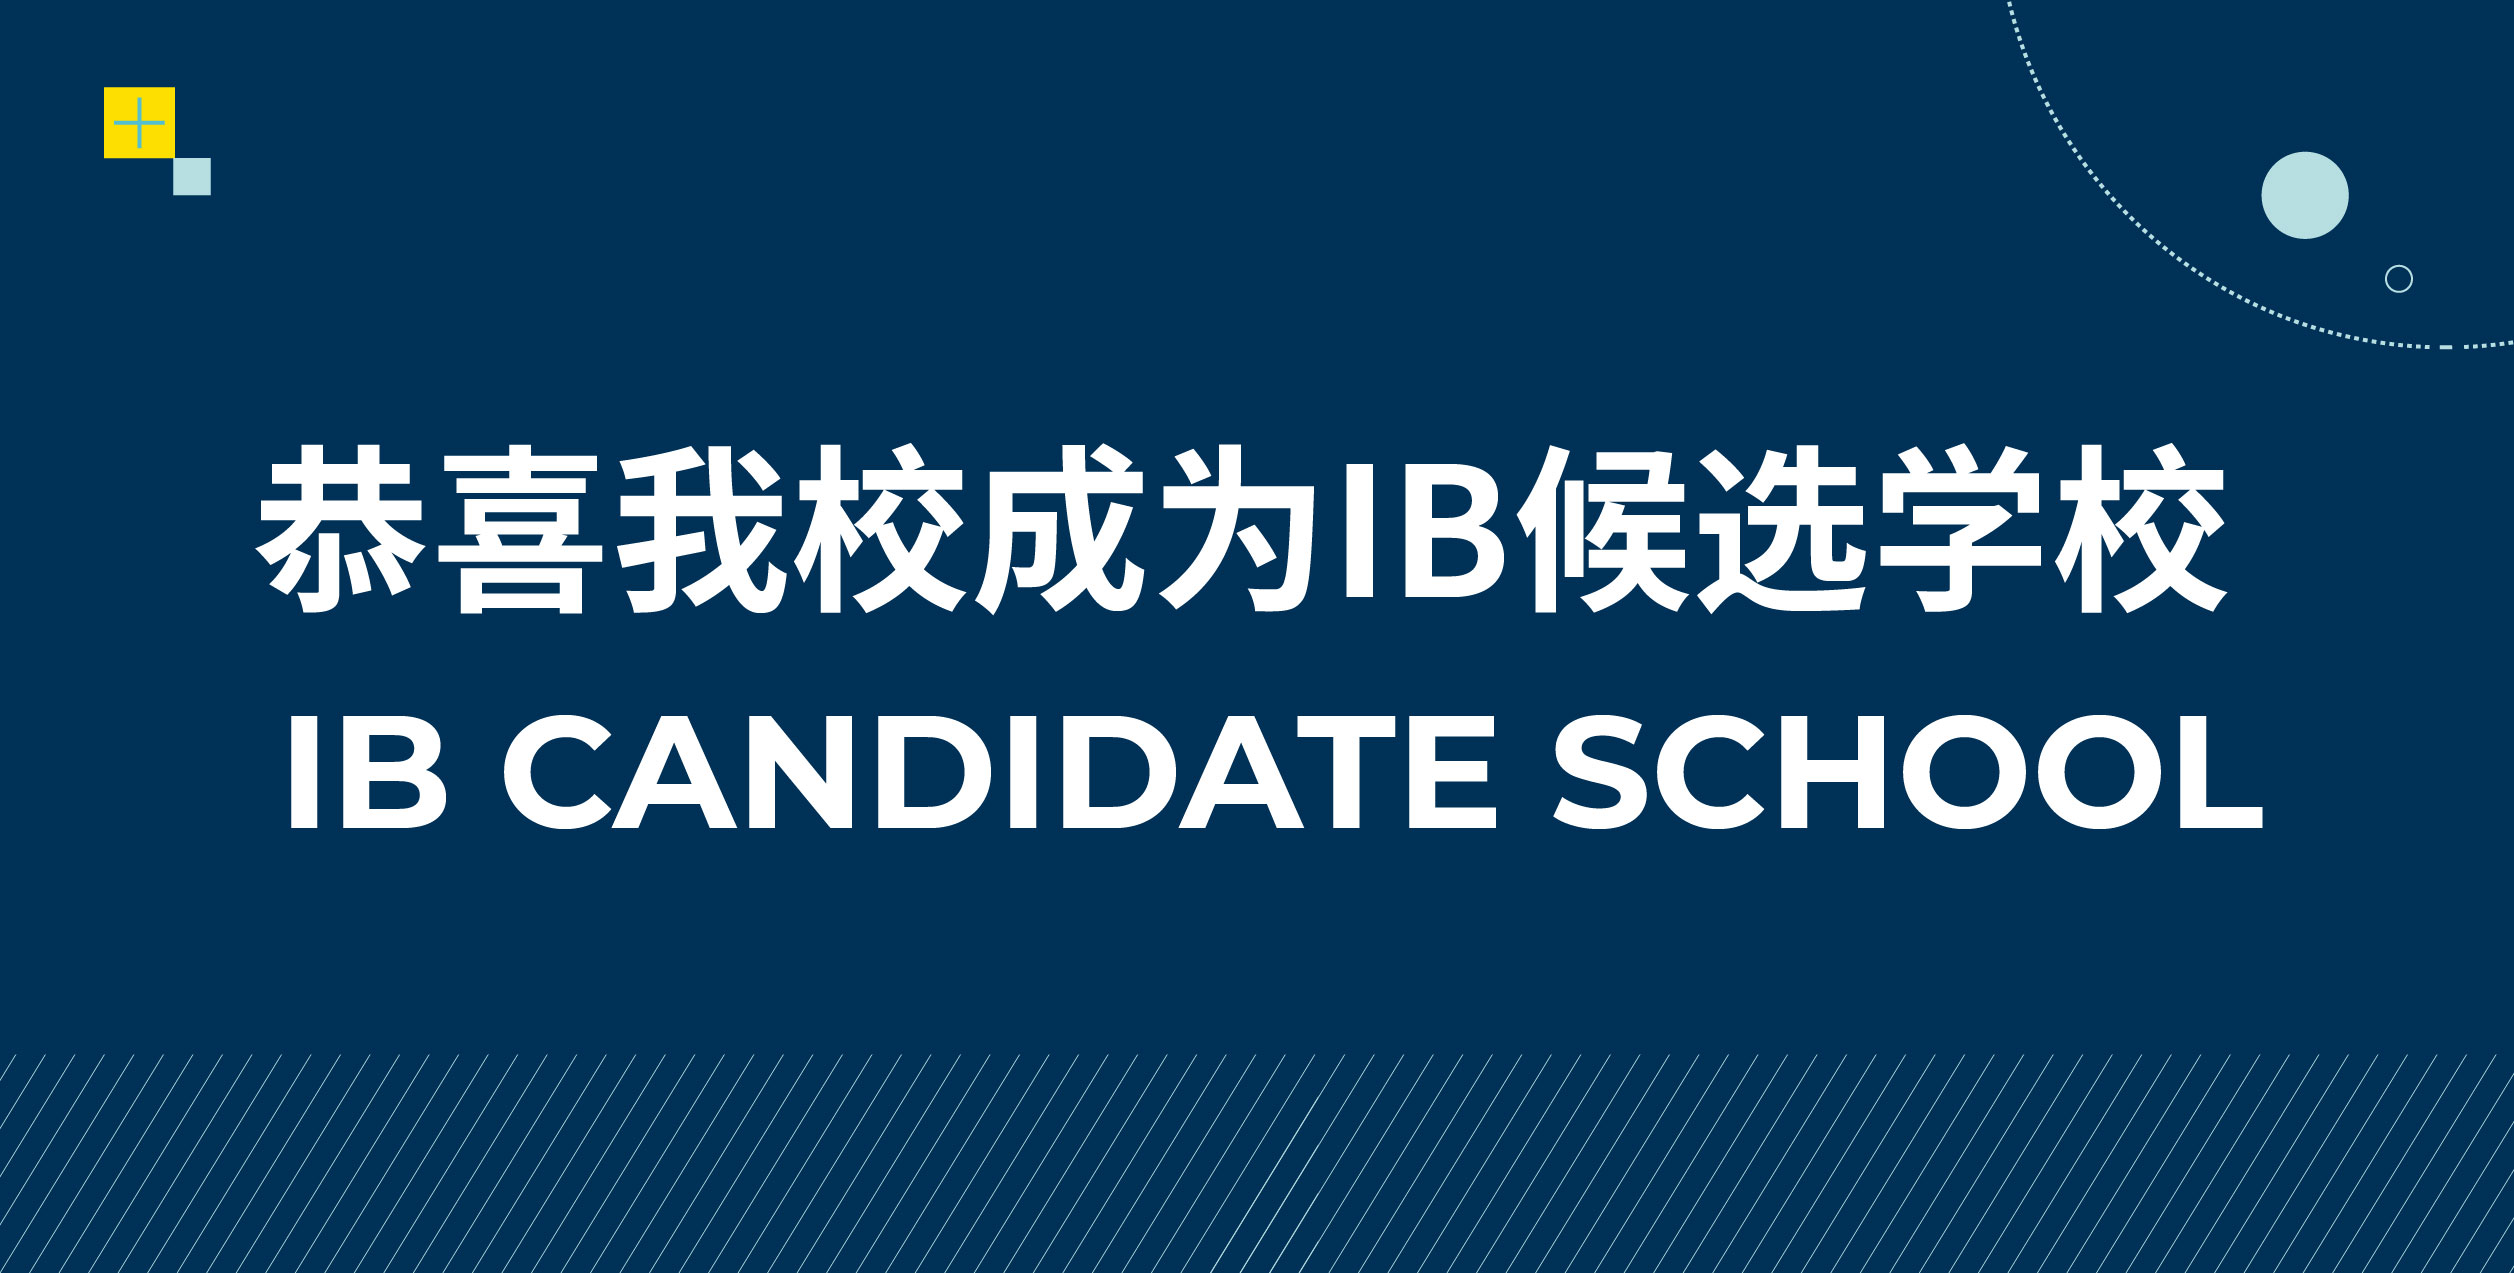 IB Candidate School - IB Candidate School